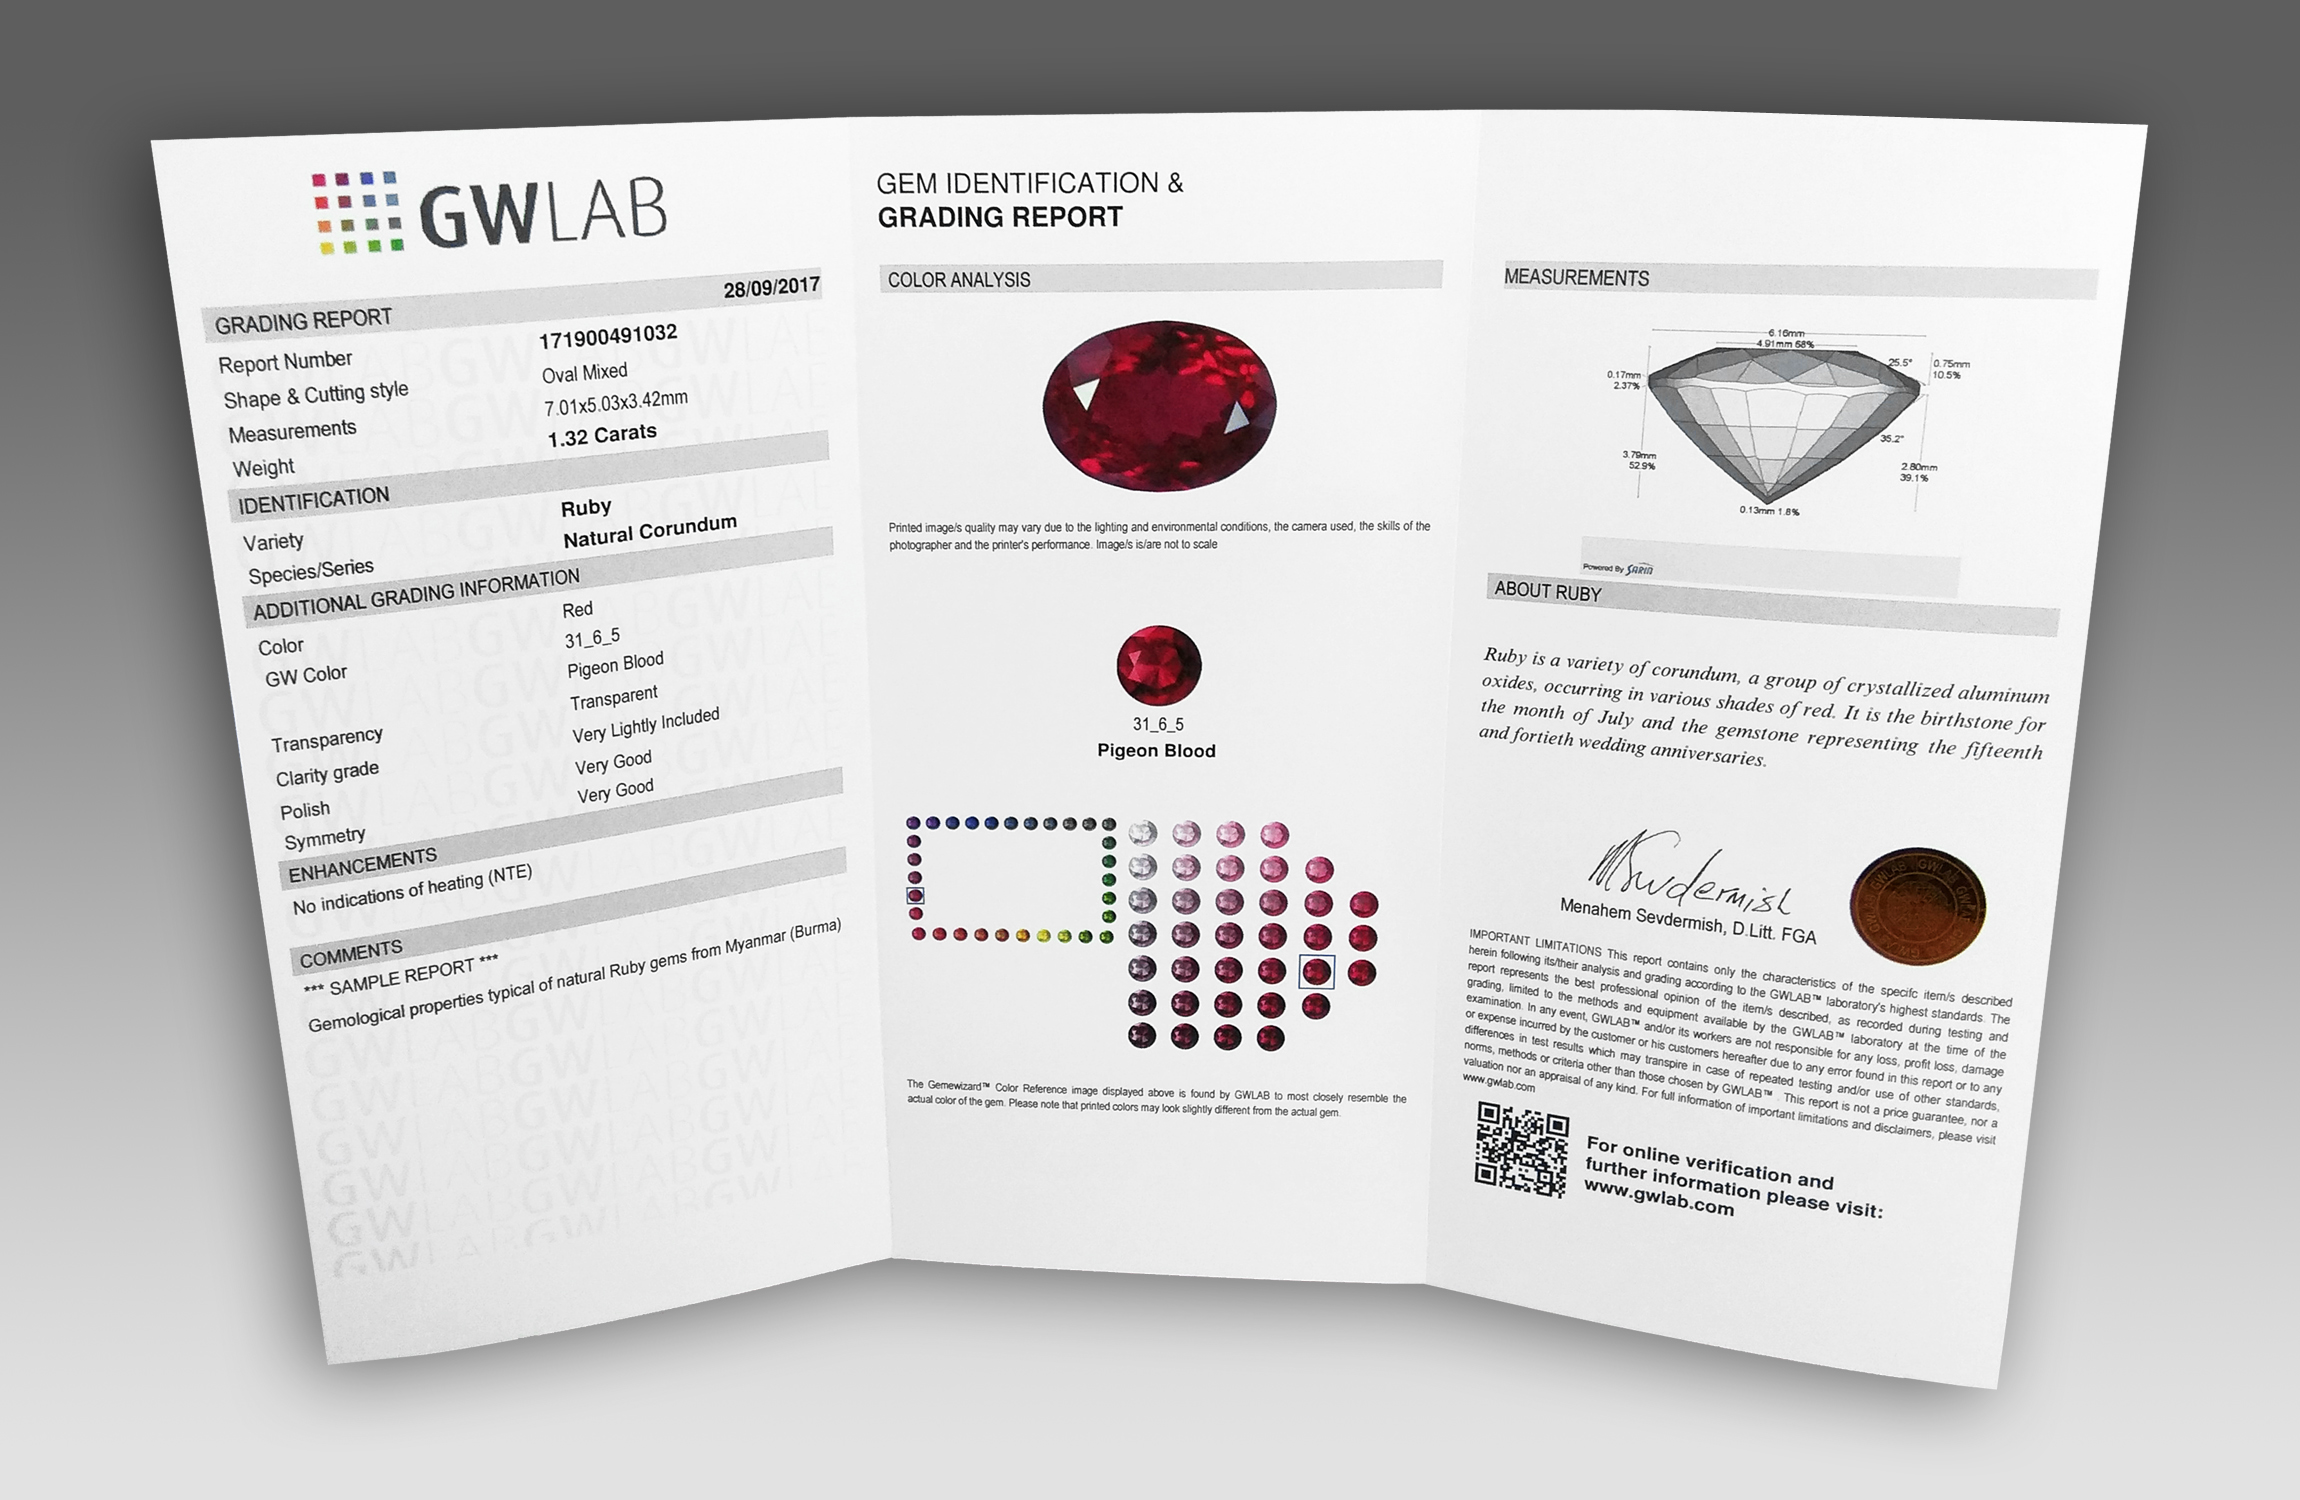 GWLAB Gem Identification And Grading Report - Inner Side